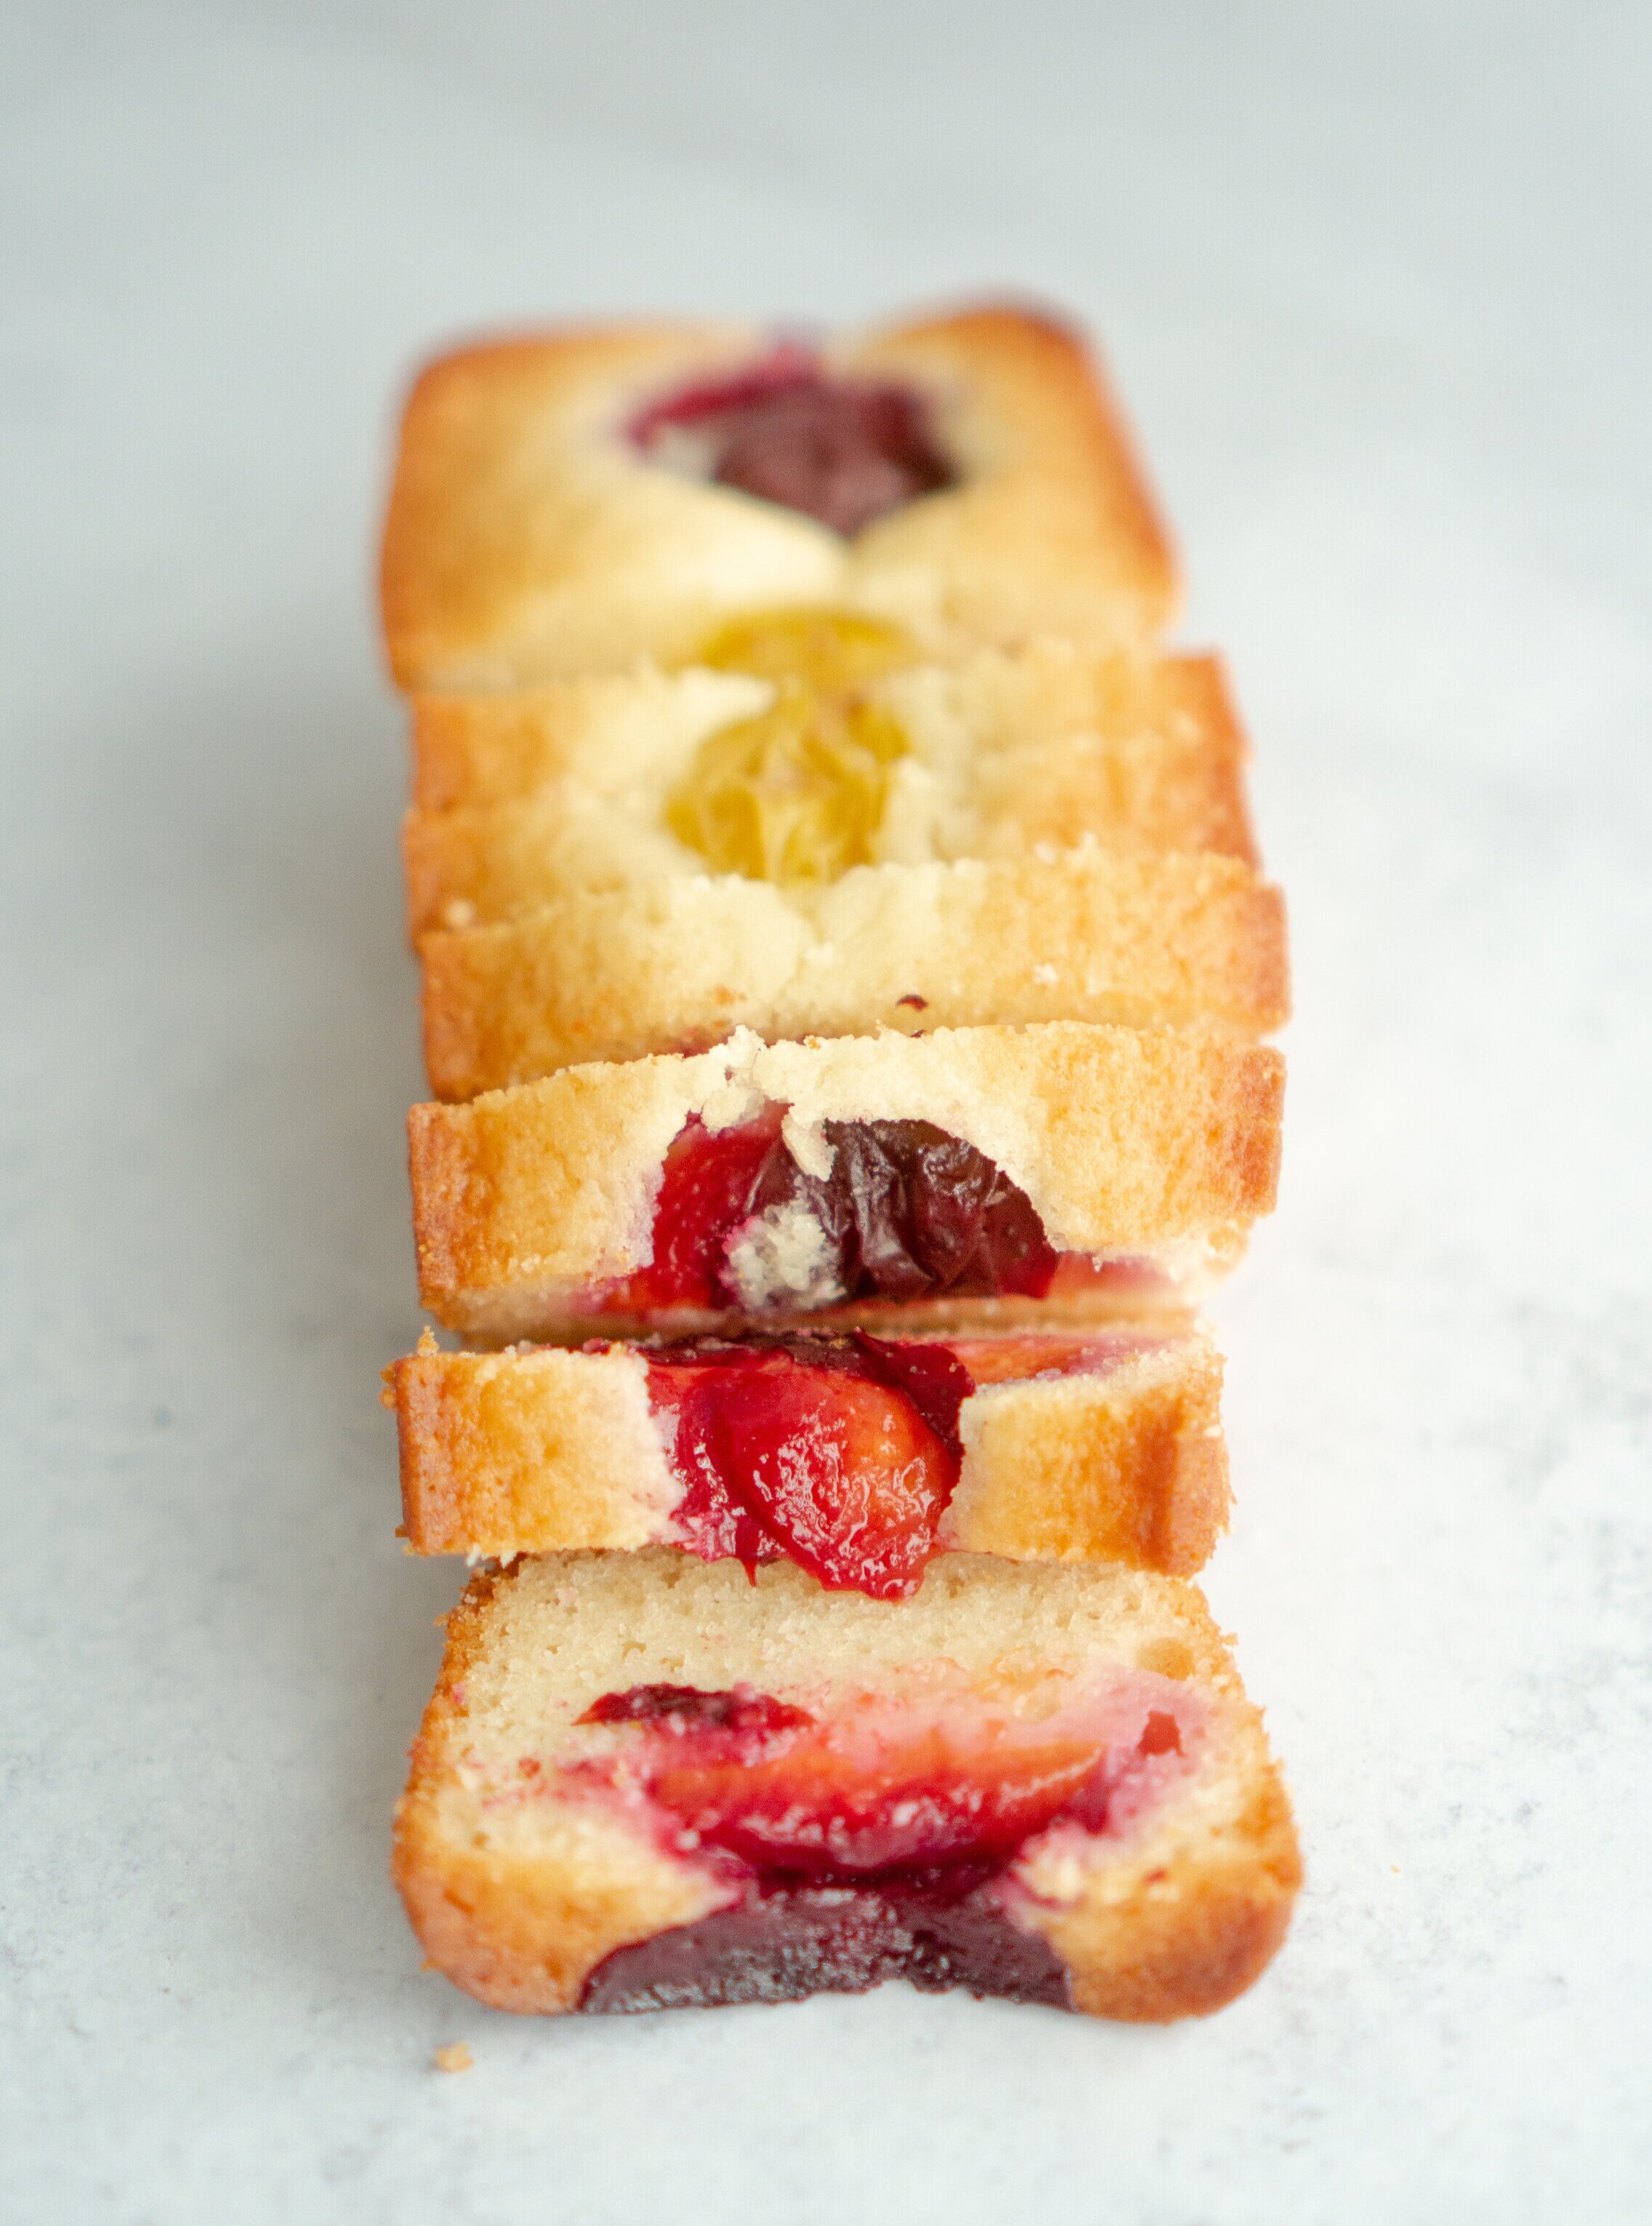 https://images.squarespace-cdn.com/content/v1/5f0396837cd64e30d69a57f3/1596674170348-38K5X0DEI3XHUCBK55XH/plum%2C+plums%2C+plum+recipes%2C+cake+recipe%2C+yogurt+cake+recipe%2C+breakfast+cake%2C+breakfast+pastry%2C+stone+fruit%2C+yogurt%2C+yogurt+cake%2C+plum+cake%2C+mini+loaves%2C+mini+loaf%2C+loaf+cake%2C+almond%2C+almond+cake%2C+frangipane%2C+plum+tart%2C+almond+flour%2C+ground+almonds%2C+almond+flour+recipes%2C+almond+flour+cake%2C+greek+yogurt%2C+yogurt+healthy%2C